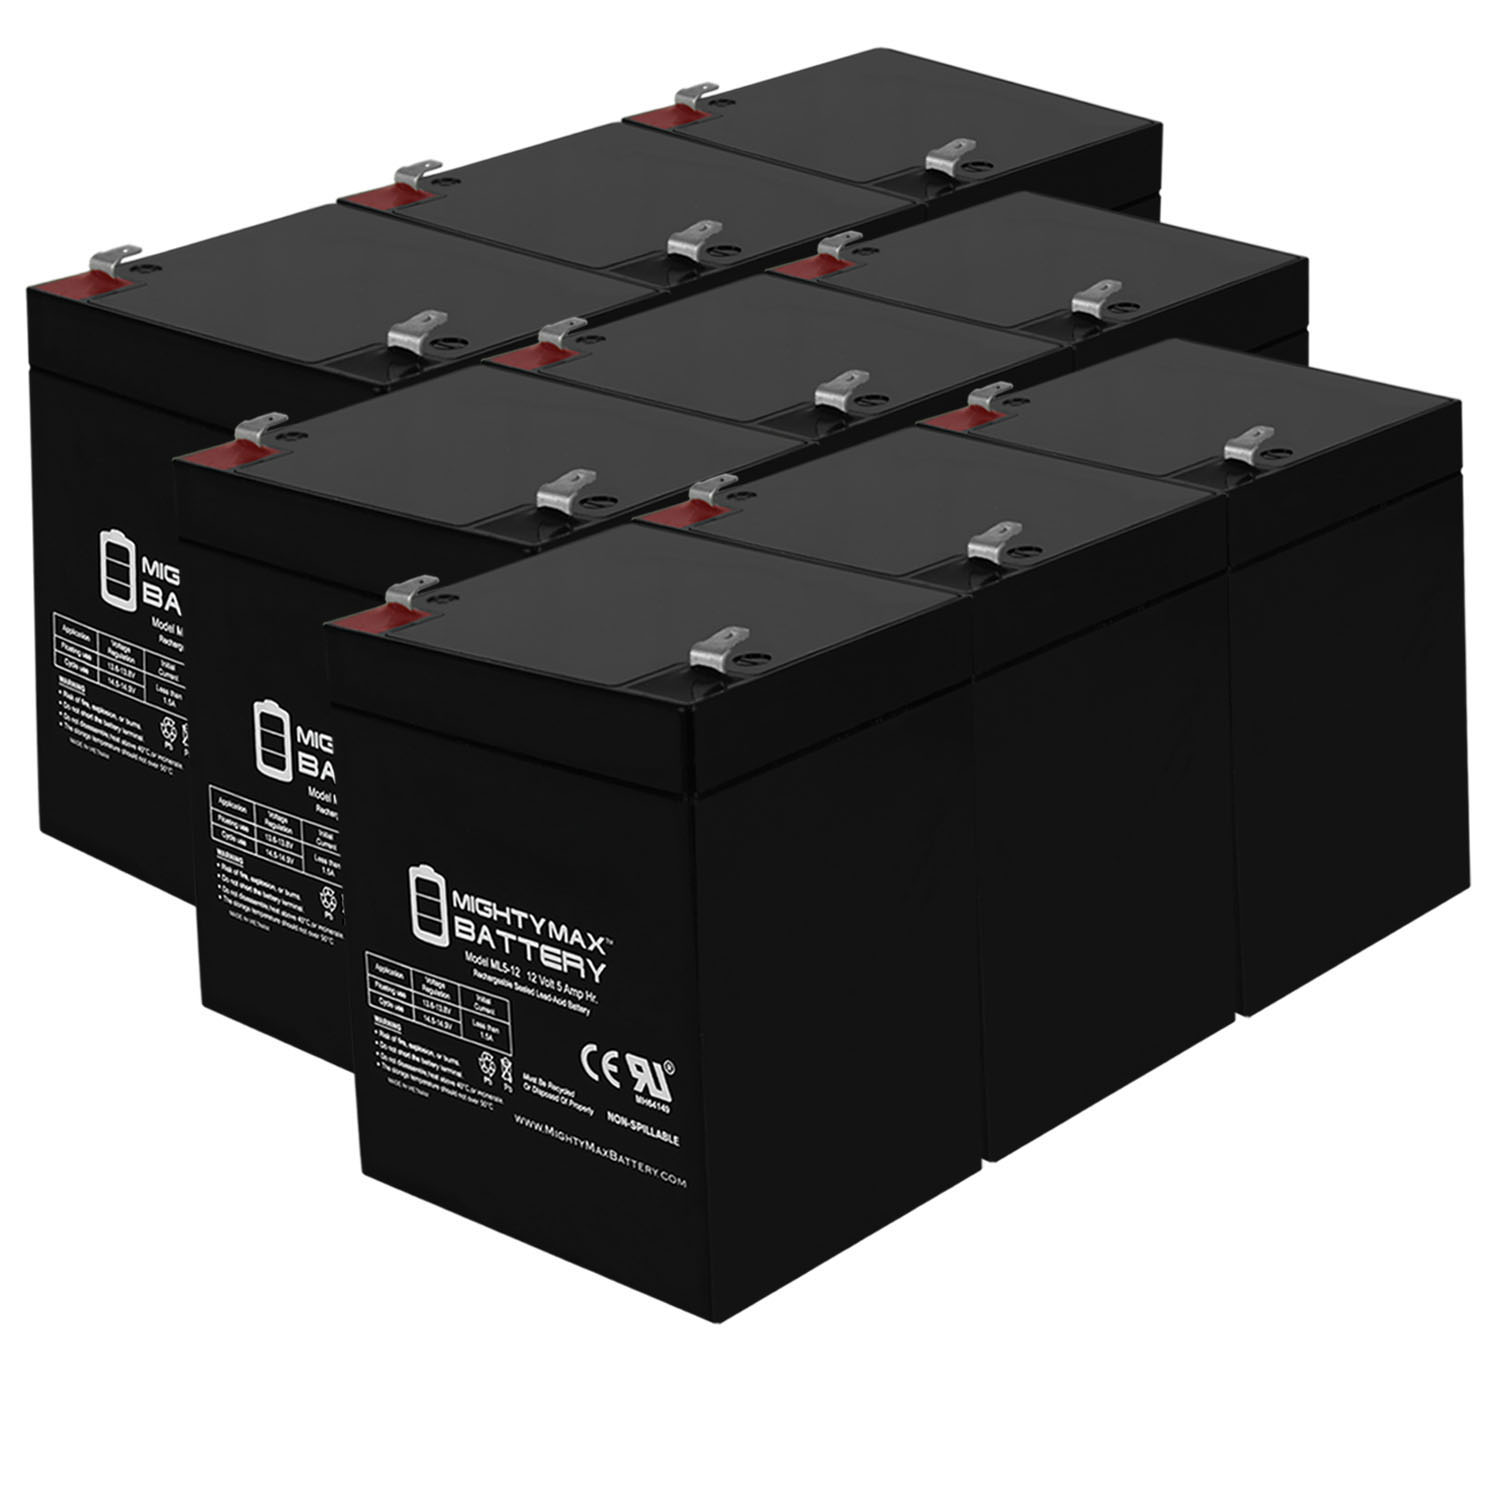 12V 5AH SLA Replacement Battery for Razor Razr MX400 - 9 Pack